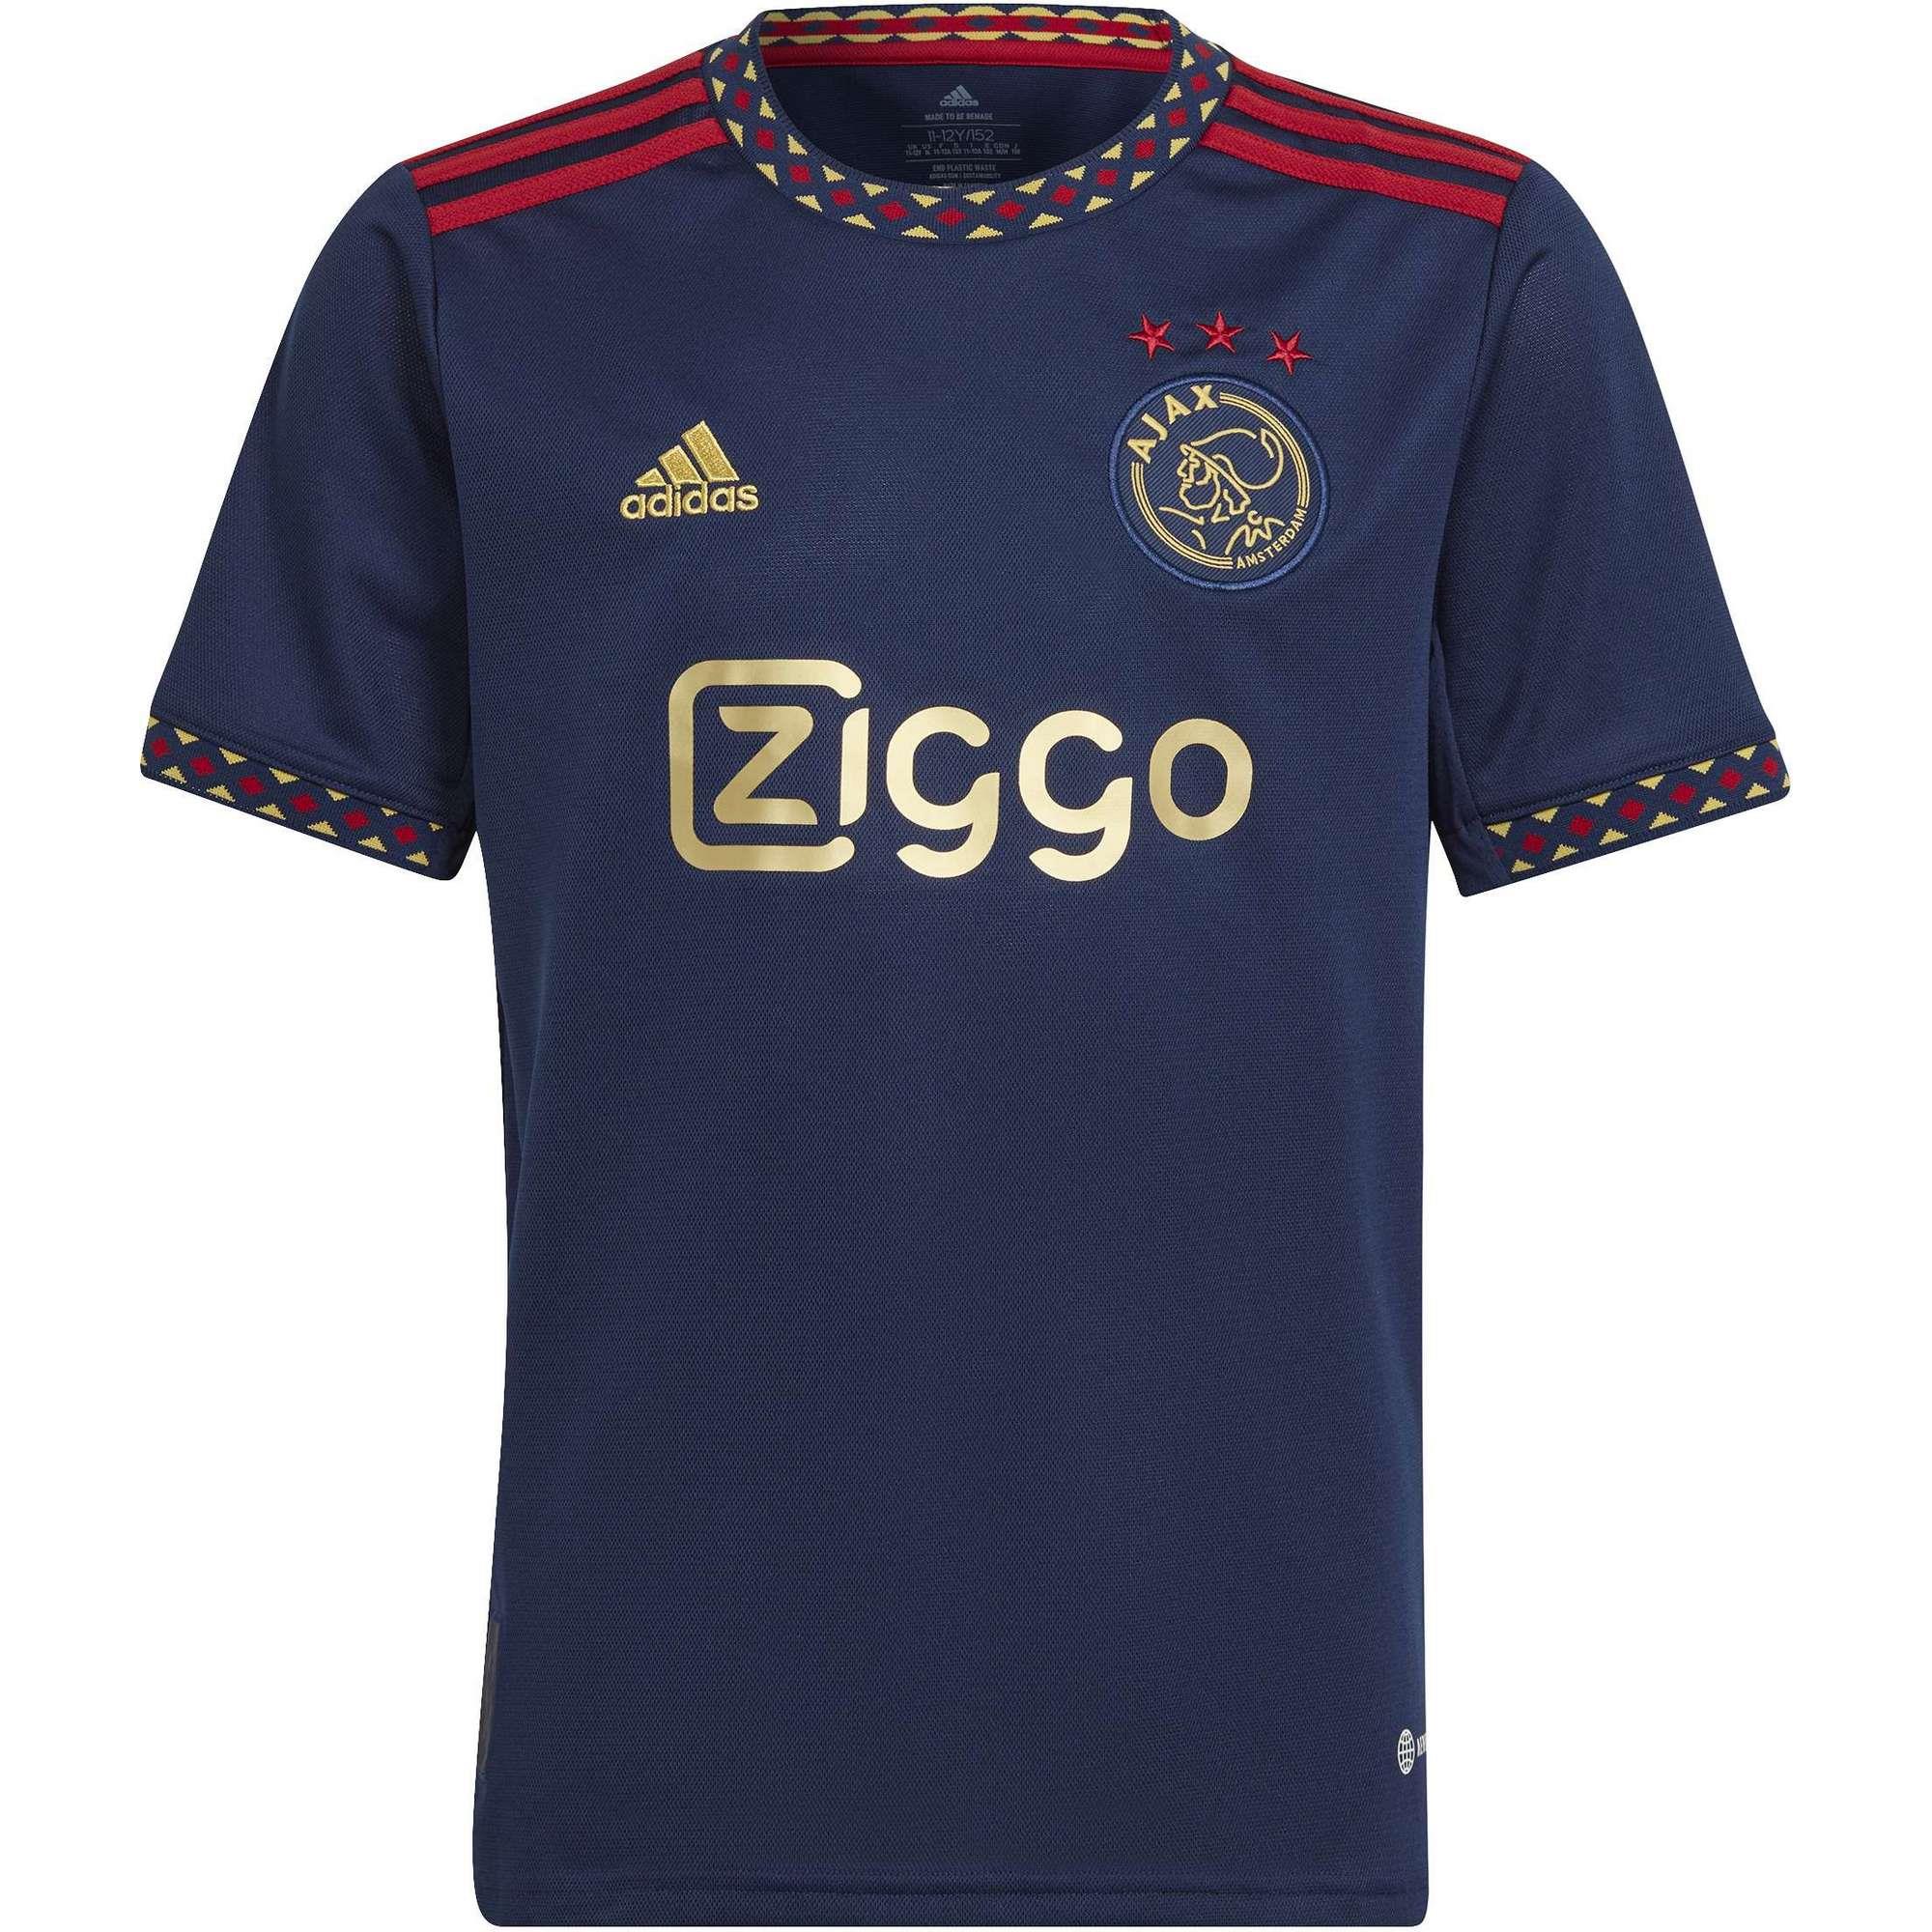 Vervreemden op gang brengen gangpad Adidas Ajax uitshirt junior 22 - 23